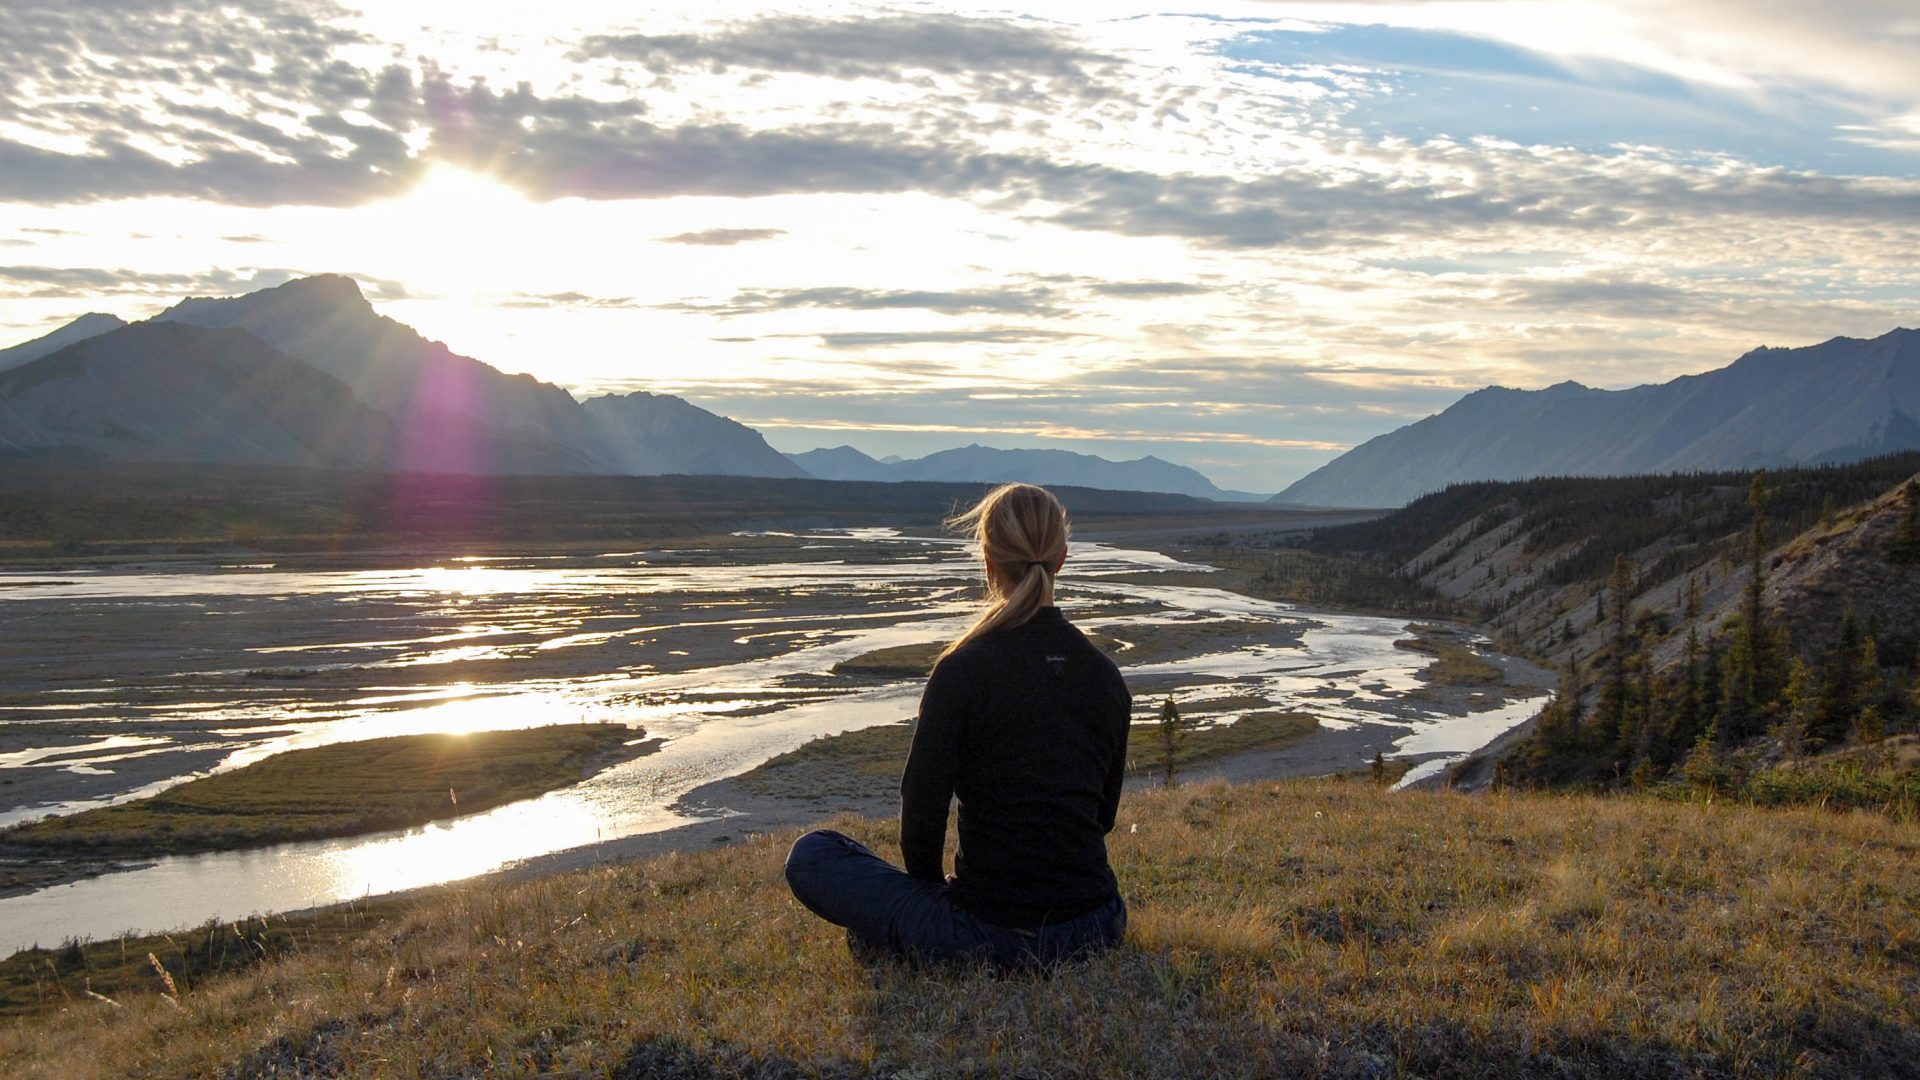 The Heart of the Yukon - Wind River - enjoying life